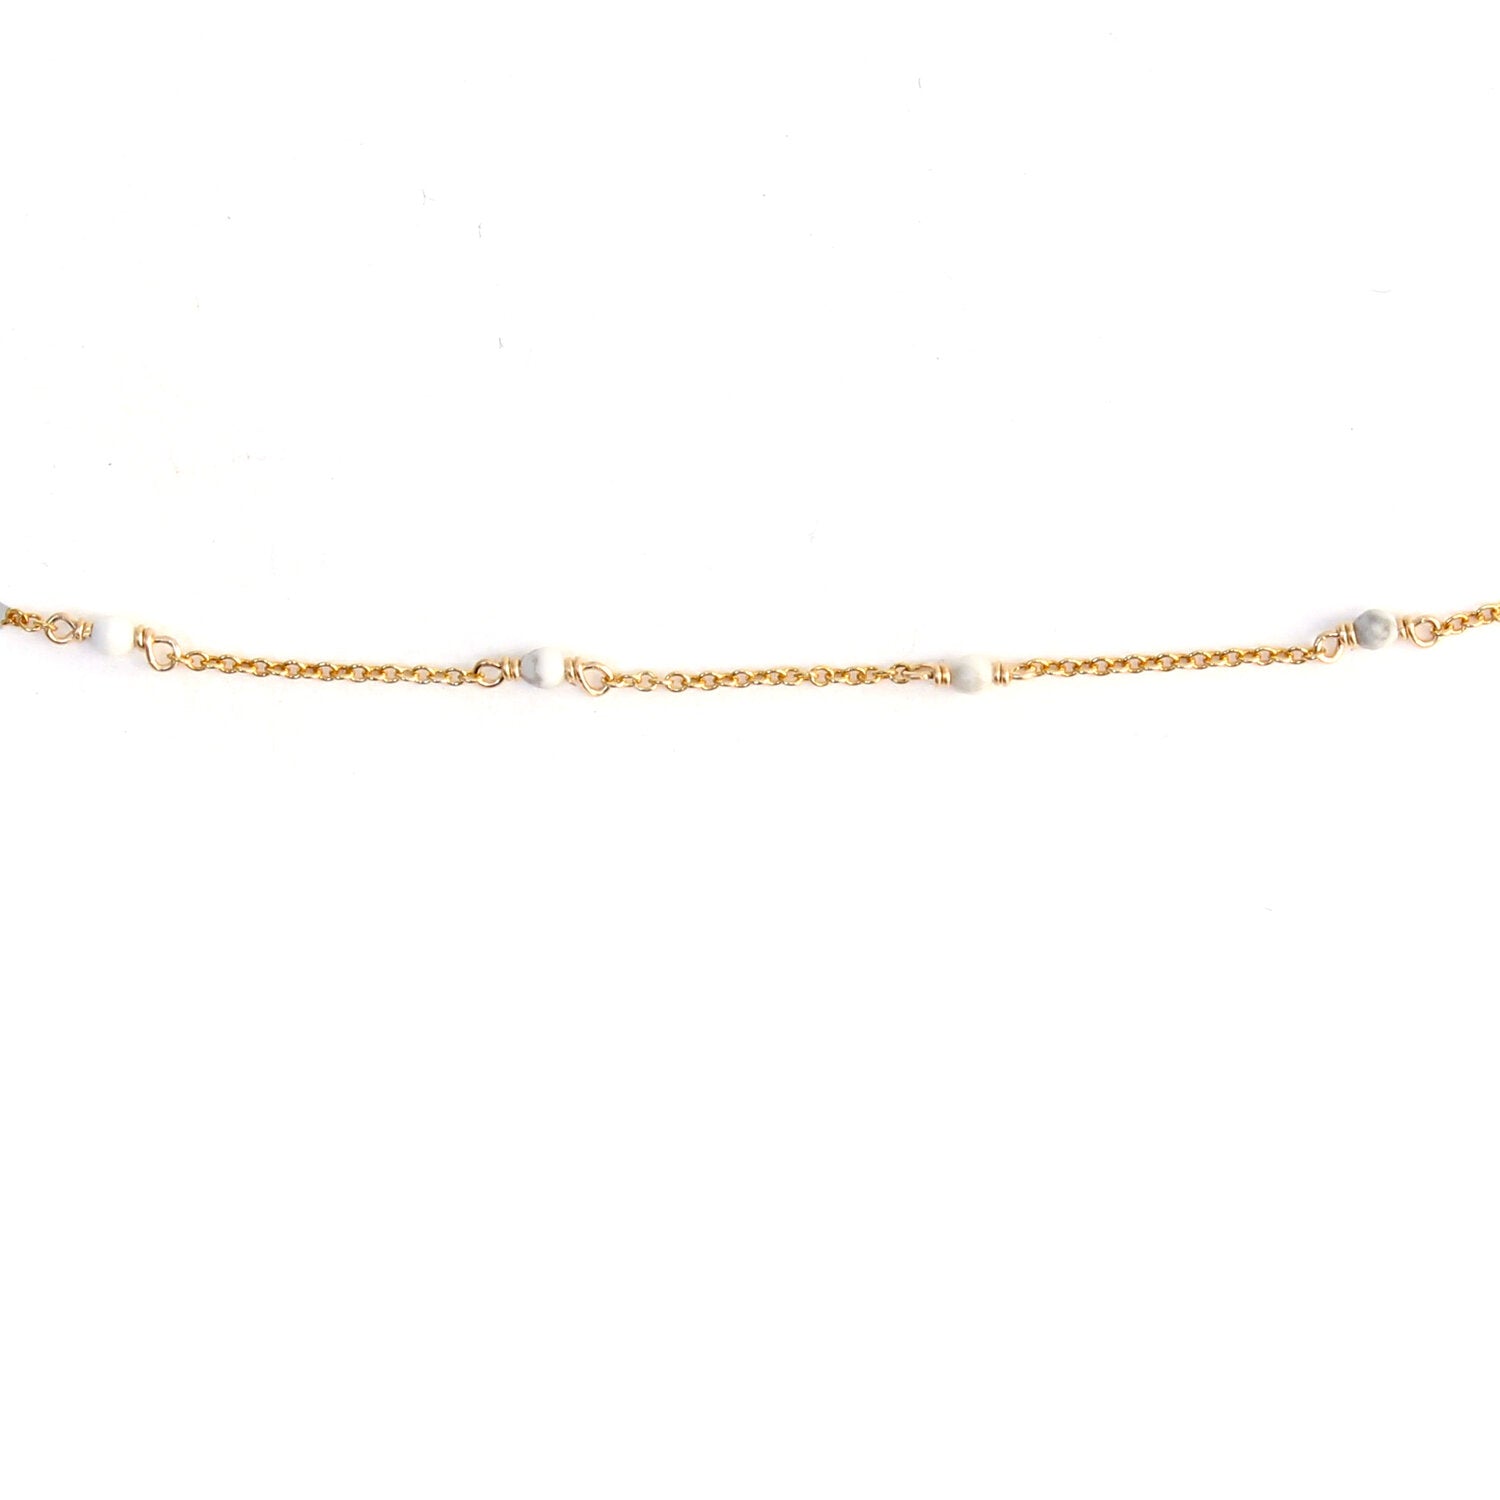 Stella Bracelet-14k Gold Filled Chain